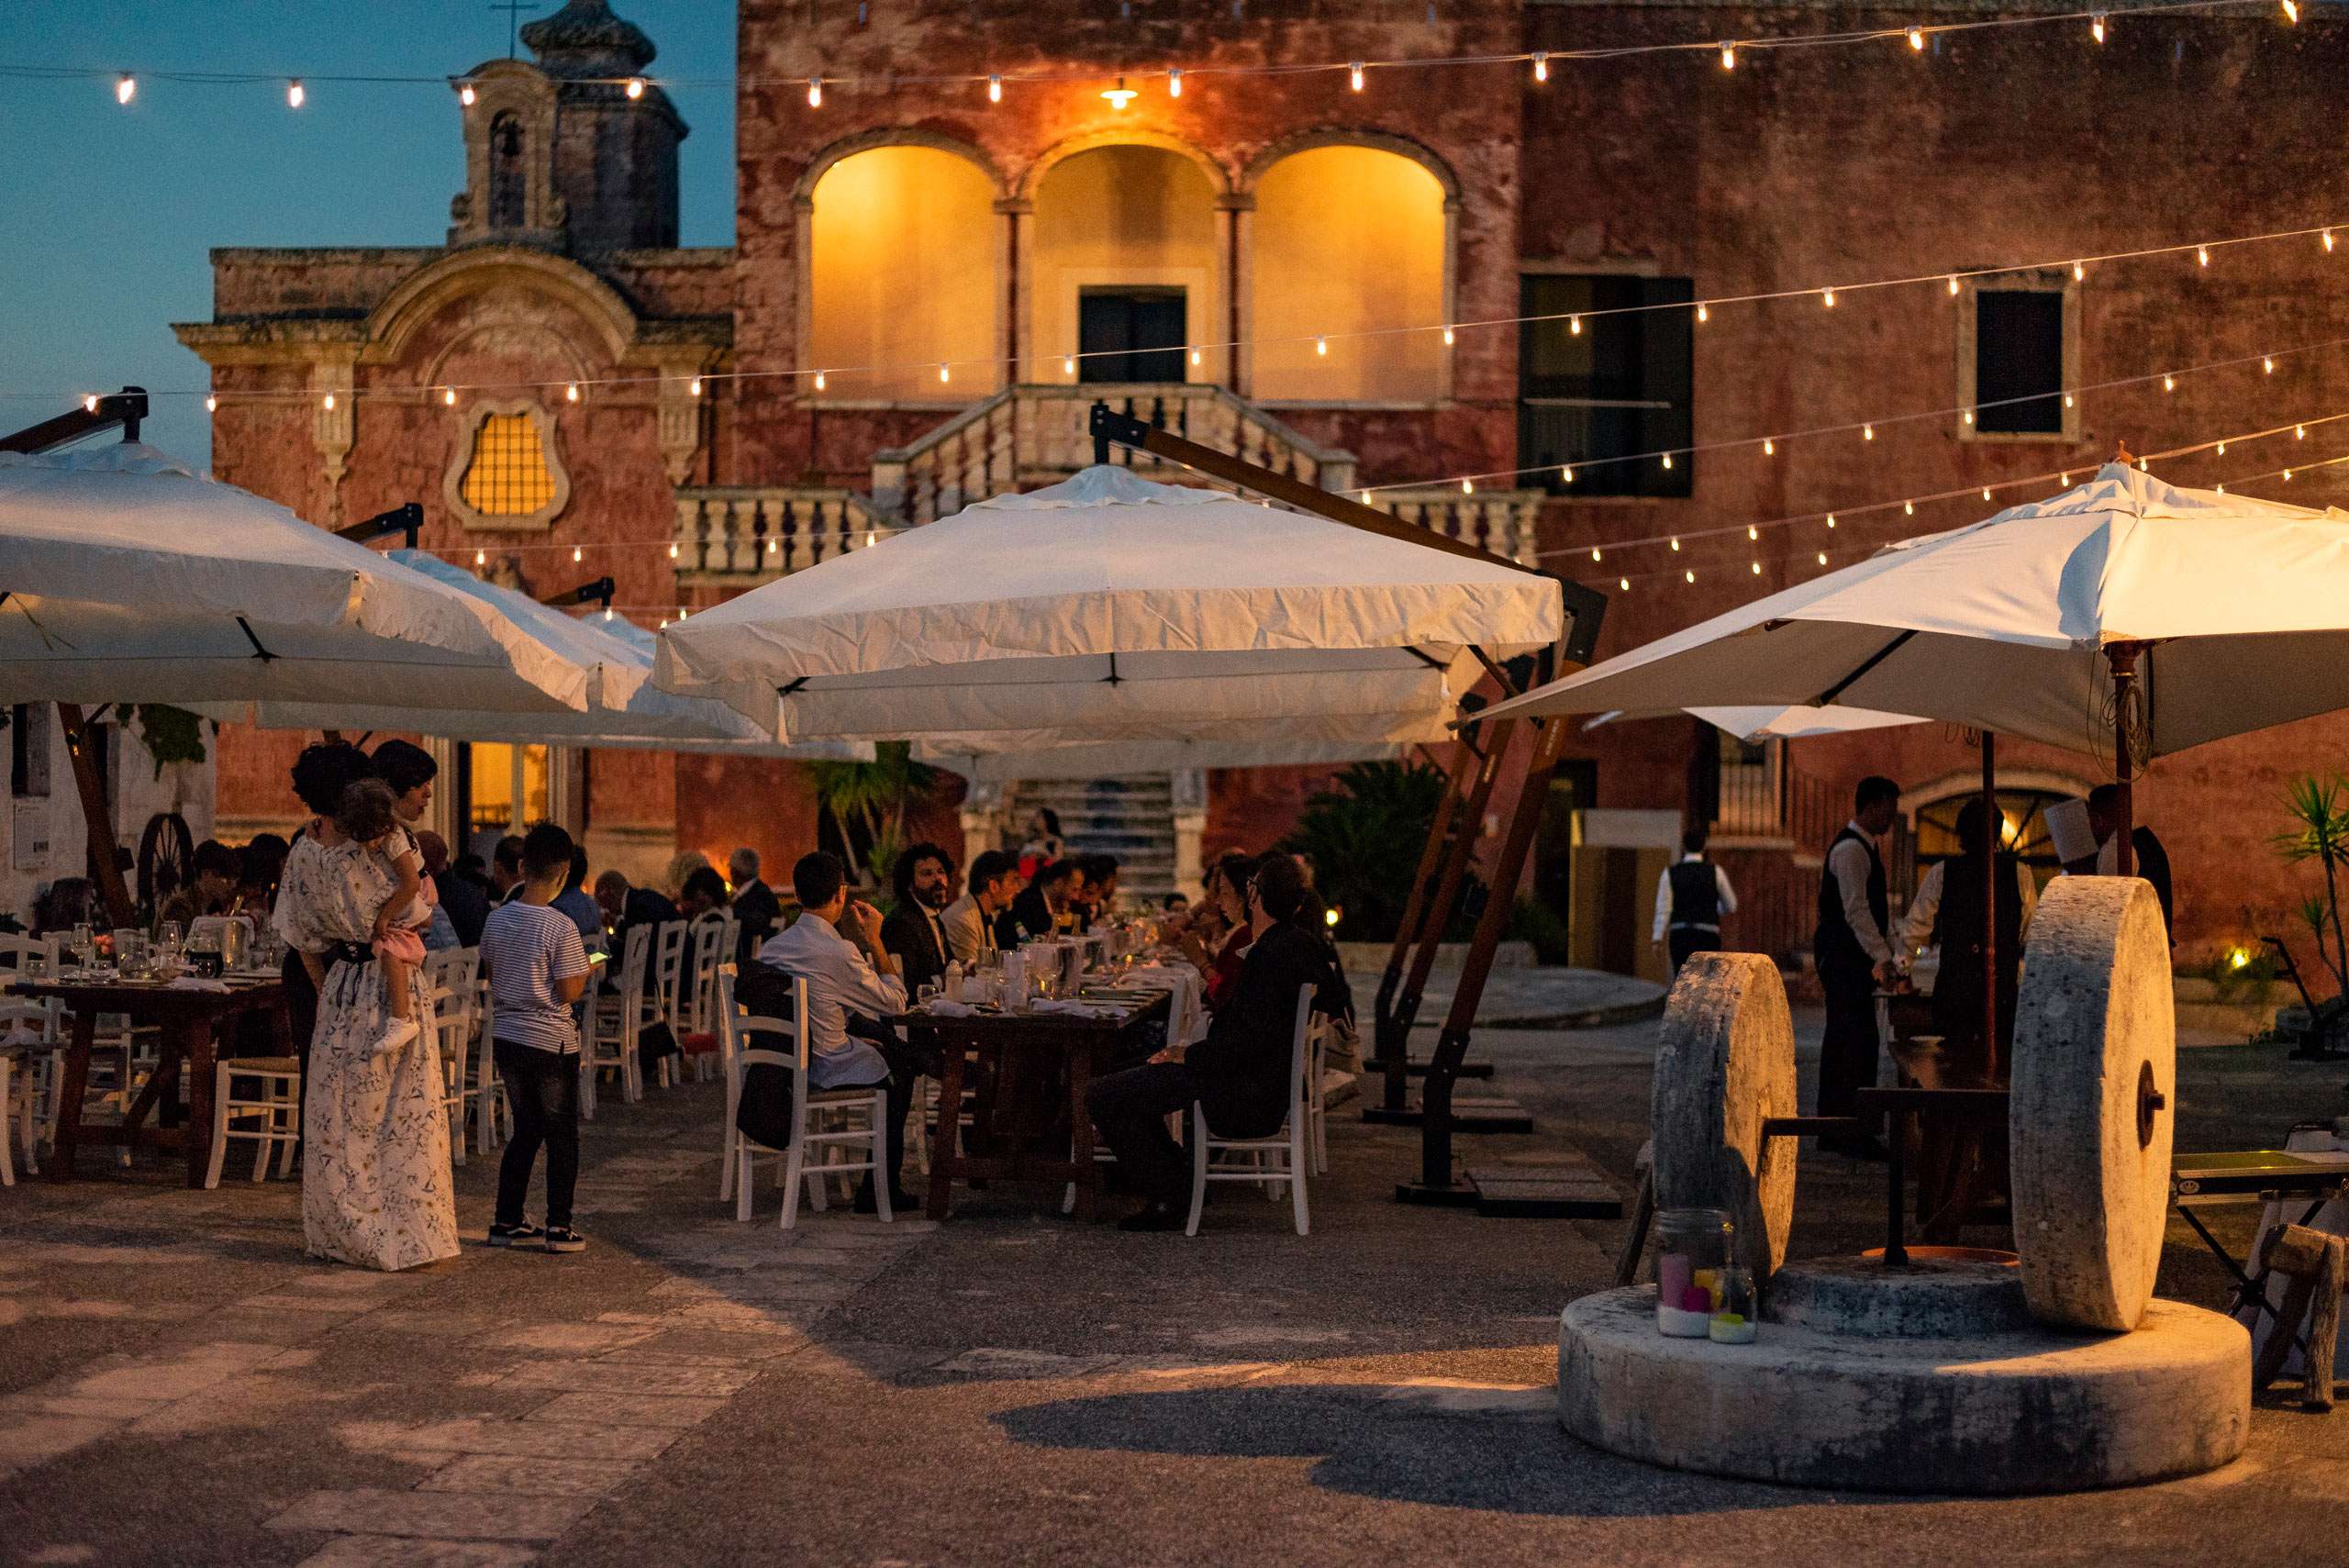 A wedding in Puglia by night at Masseria Spina Resort